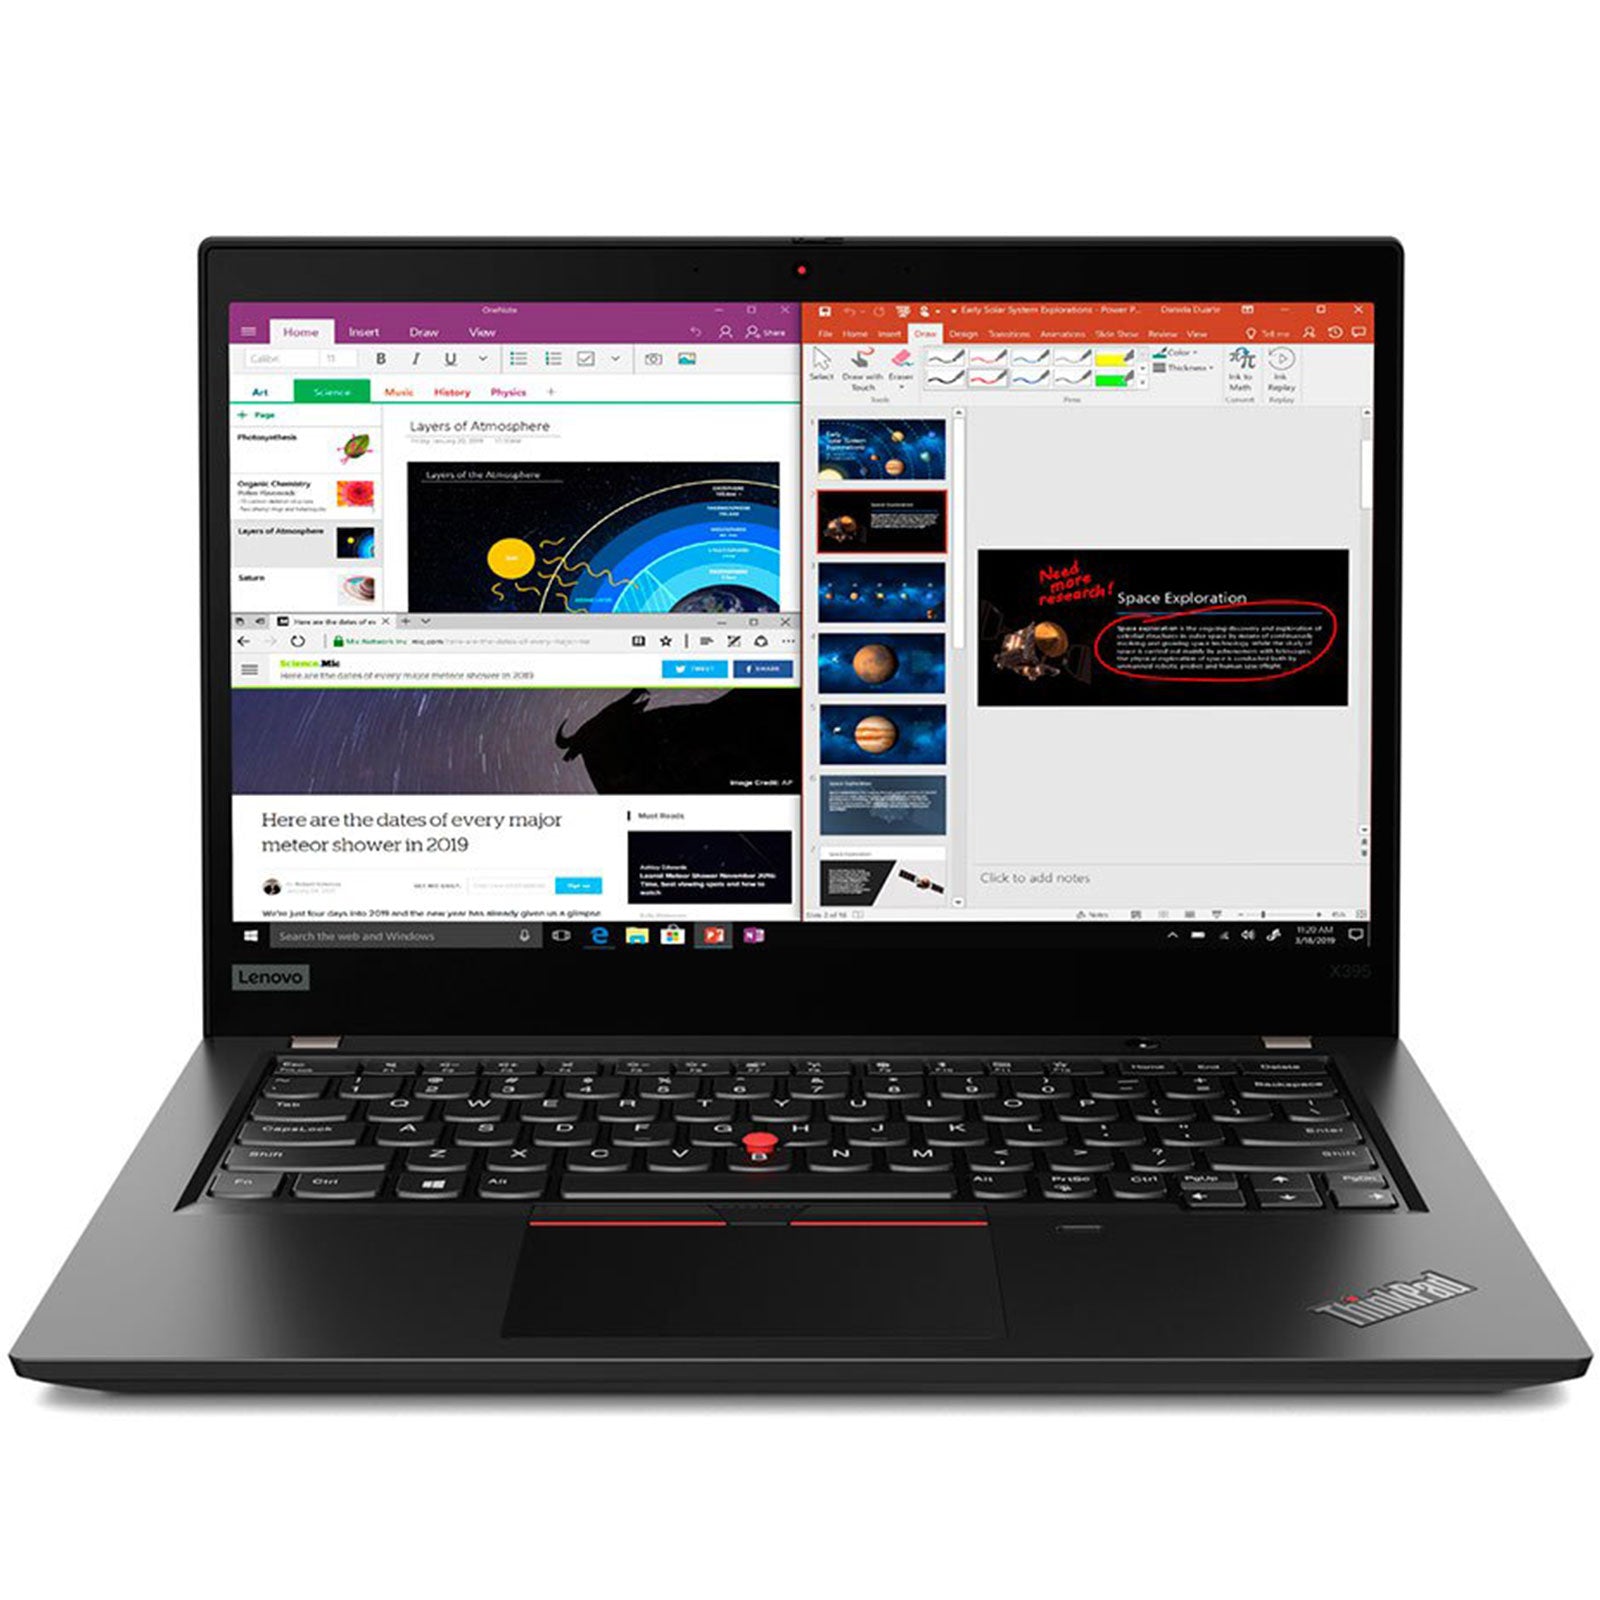 Notebook ricondizionato - Grado A - Lenovo ThinkPad X395 Notebook 13.3" Touchscreen AMD Ryzen 5 3500U Ram 16GB SSD 256GB Webcam (Ricondizionato Grado A) - Disponibile in 2-4 giorni lavorativi